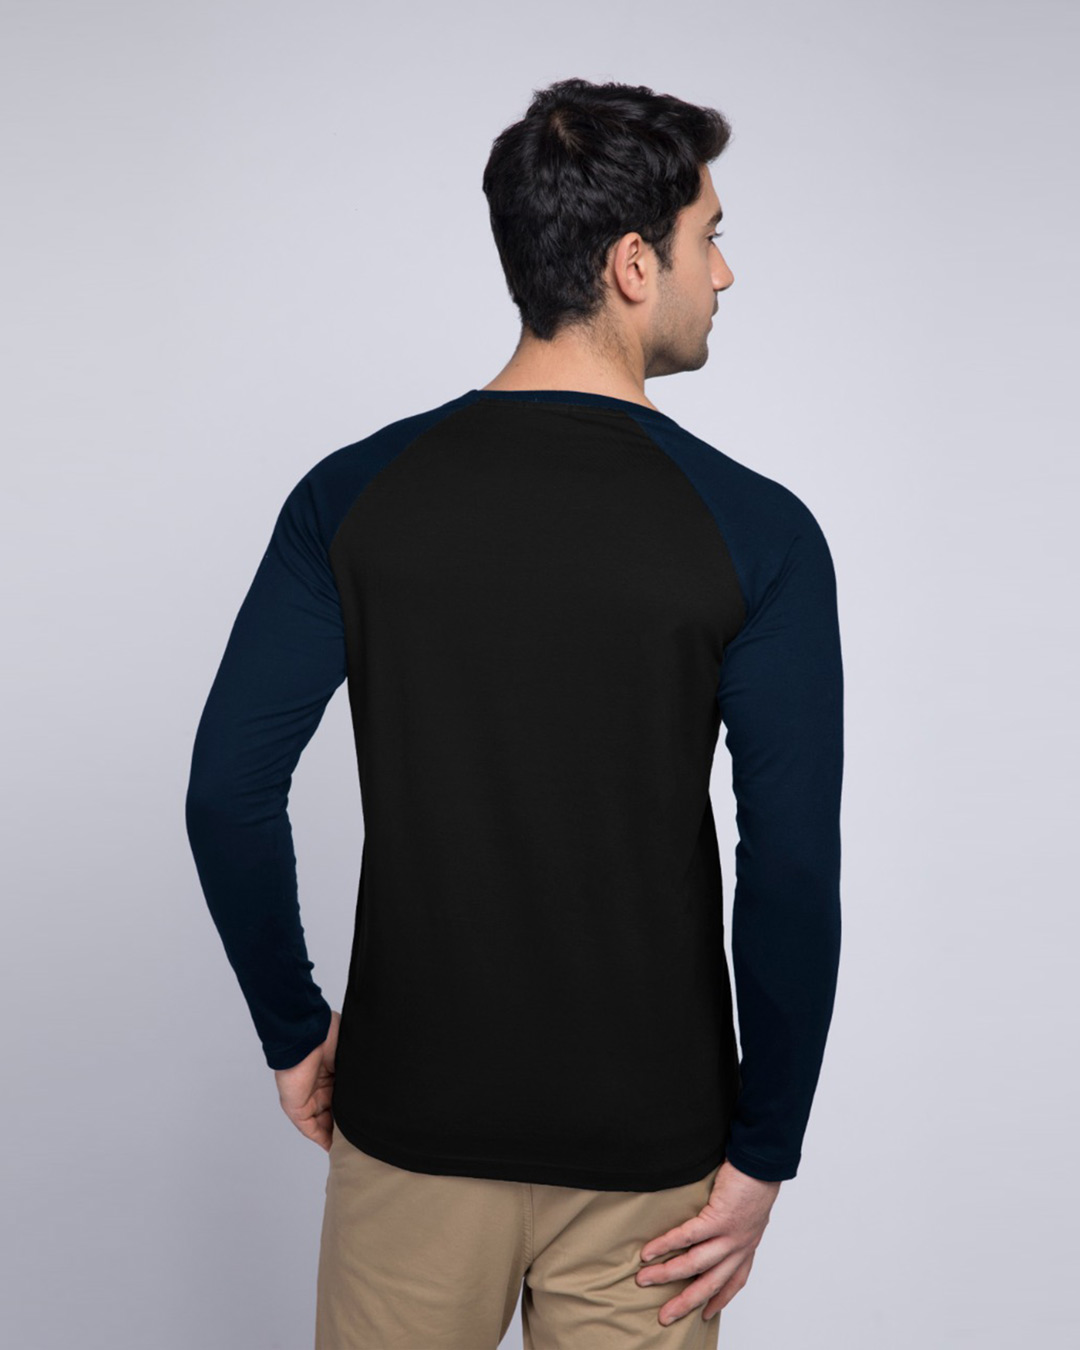 Shop Trust Your Ability Full Sleeve Raglan T-Shirt Navy Blue-Black-Back